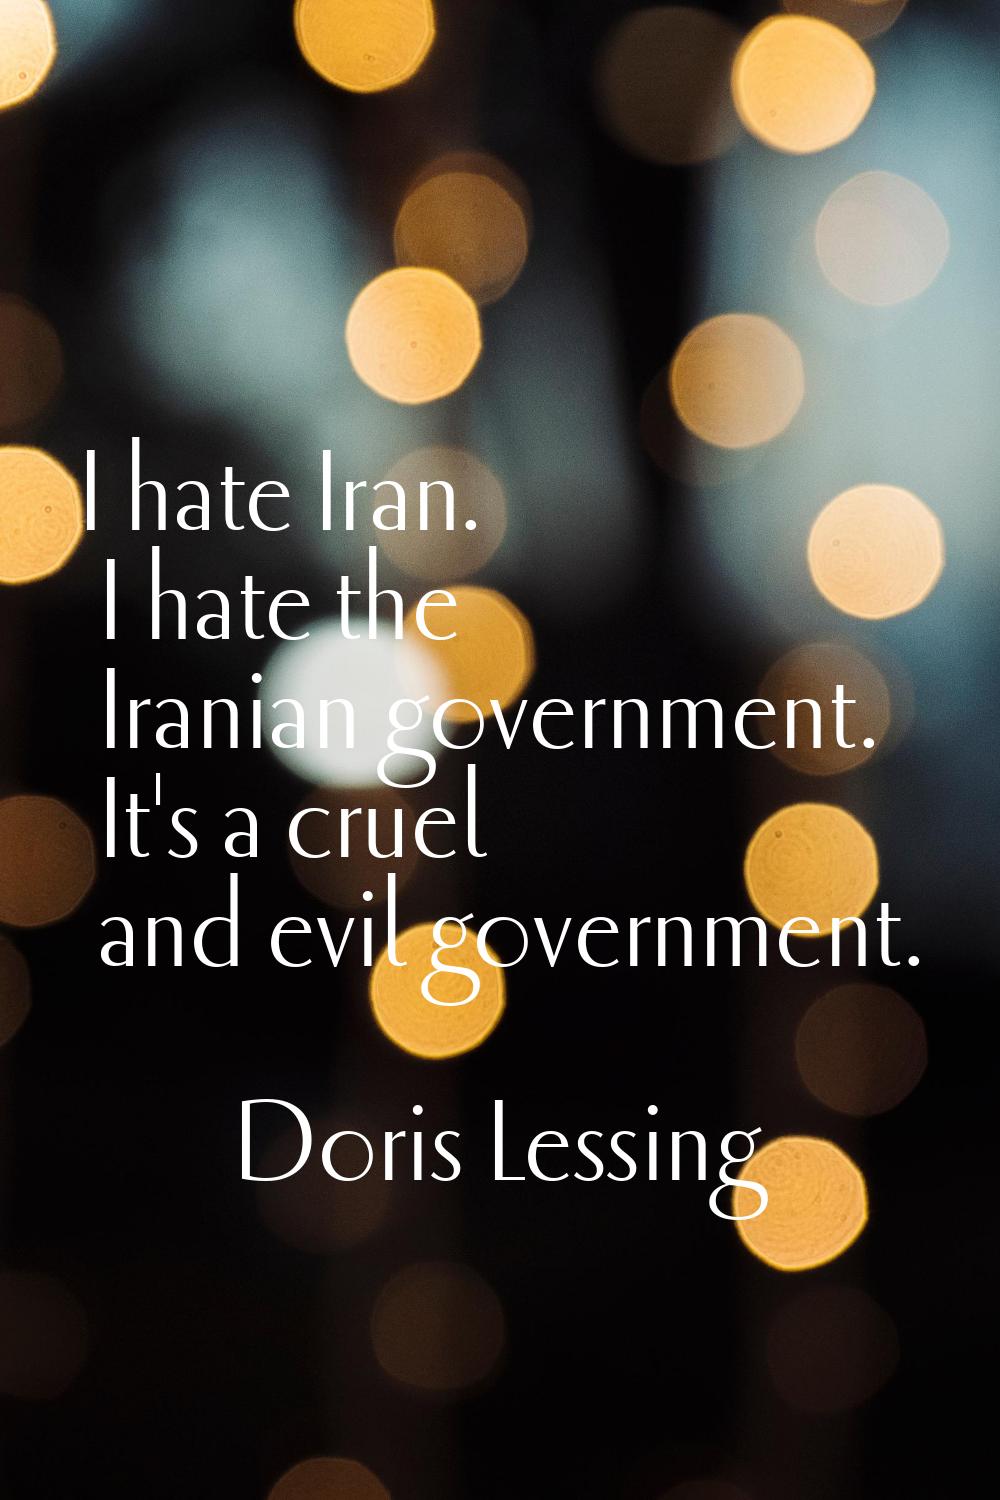 I hate Iran. I hate the Iranian government. It's a cruel and evil government.